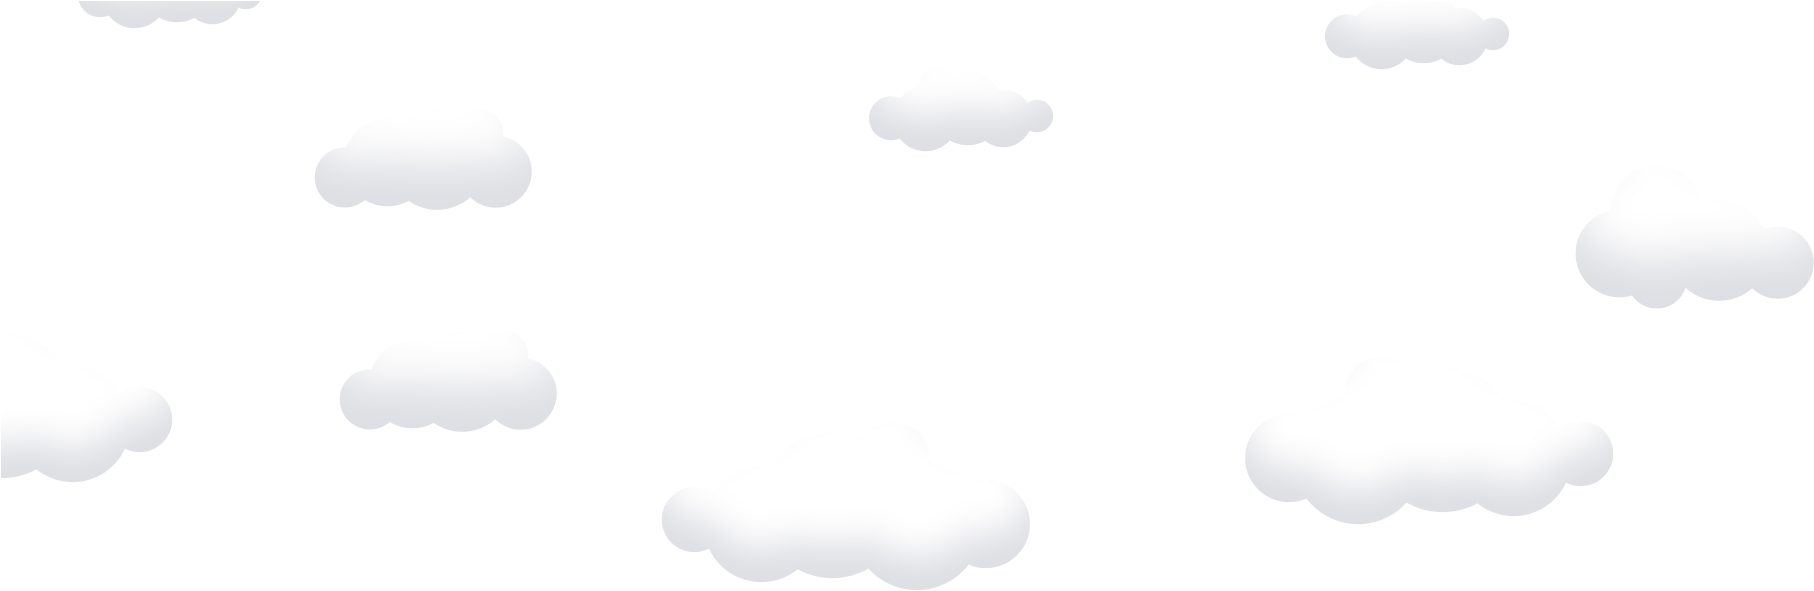 Download Peppa Pig Clouds Png , Png Download - Transparent Background ...